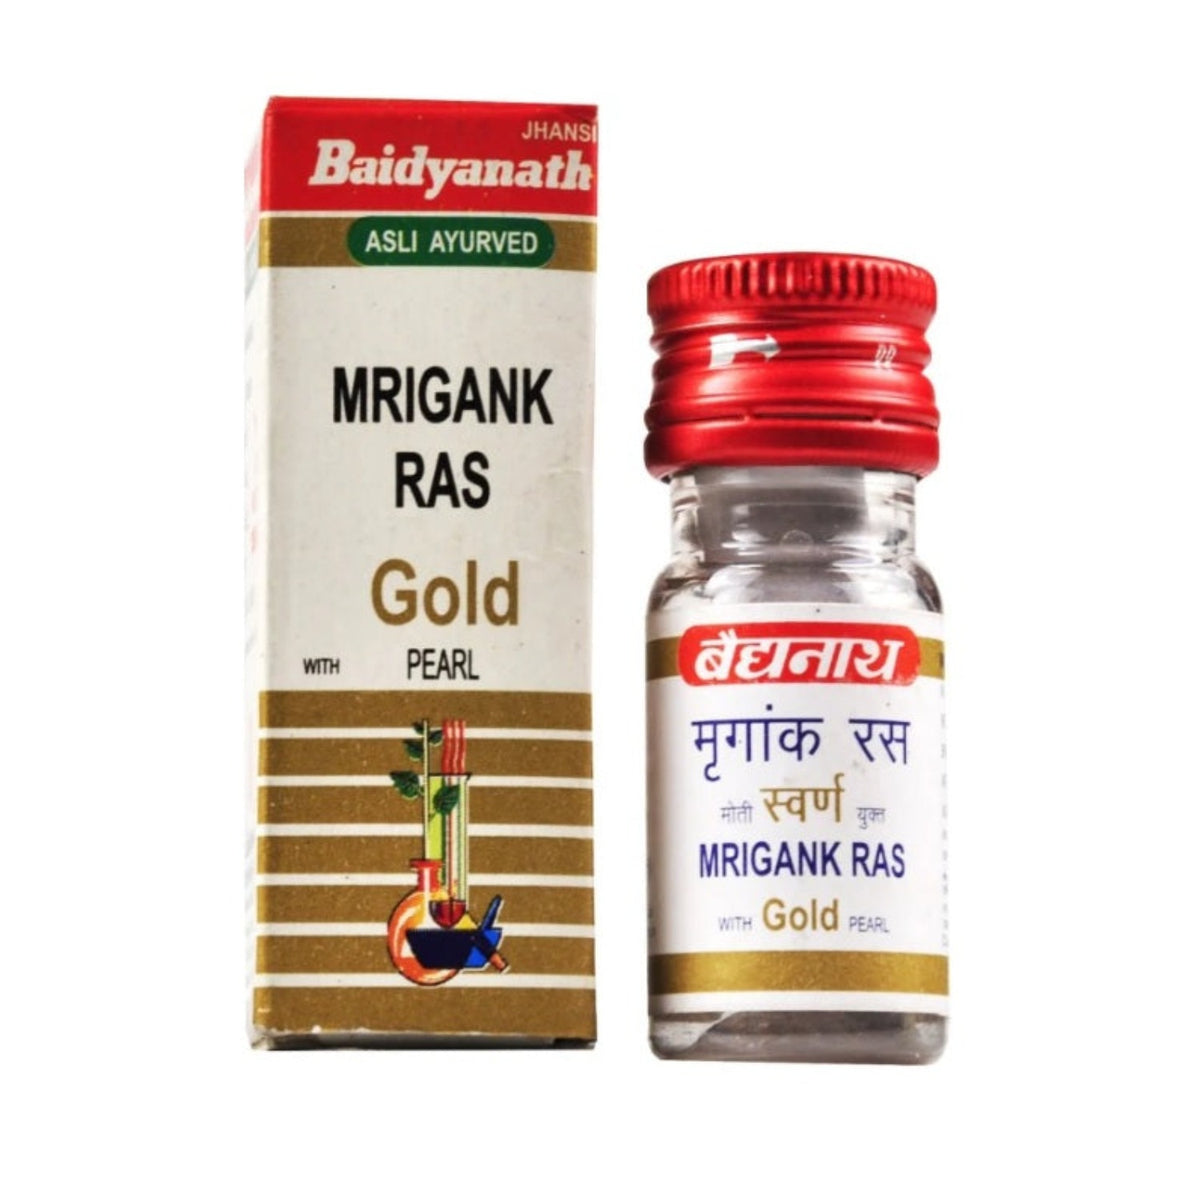 Baidyanath Ayurvedic (Jhansi) Mrigank Ras with Gold Pearl Powder